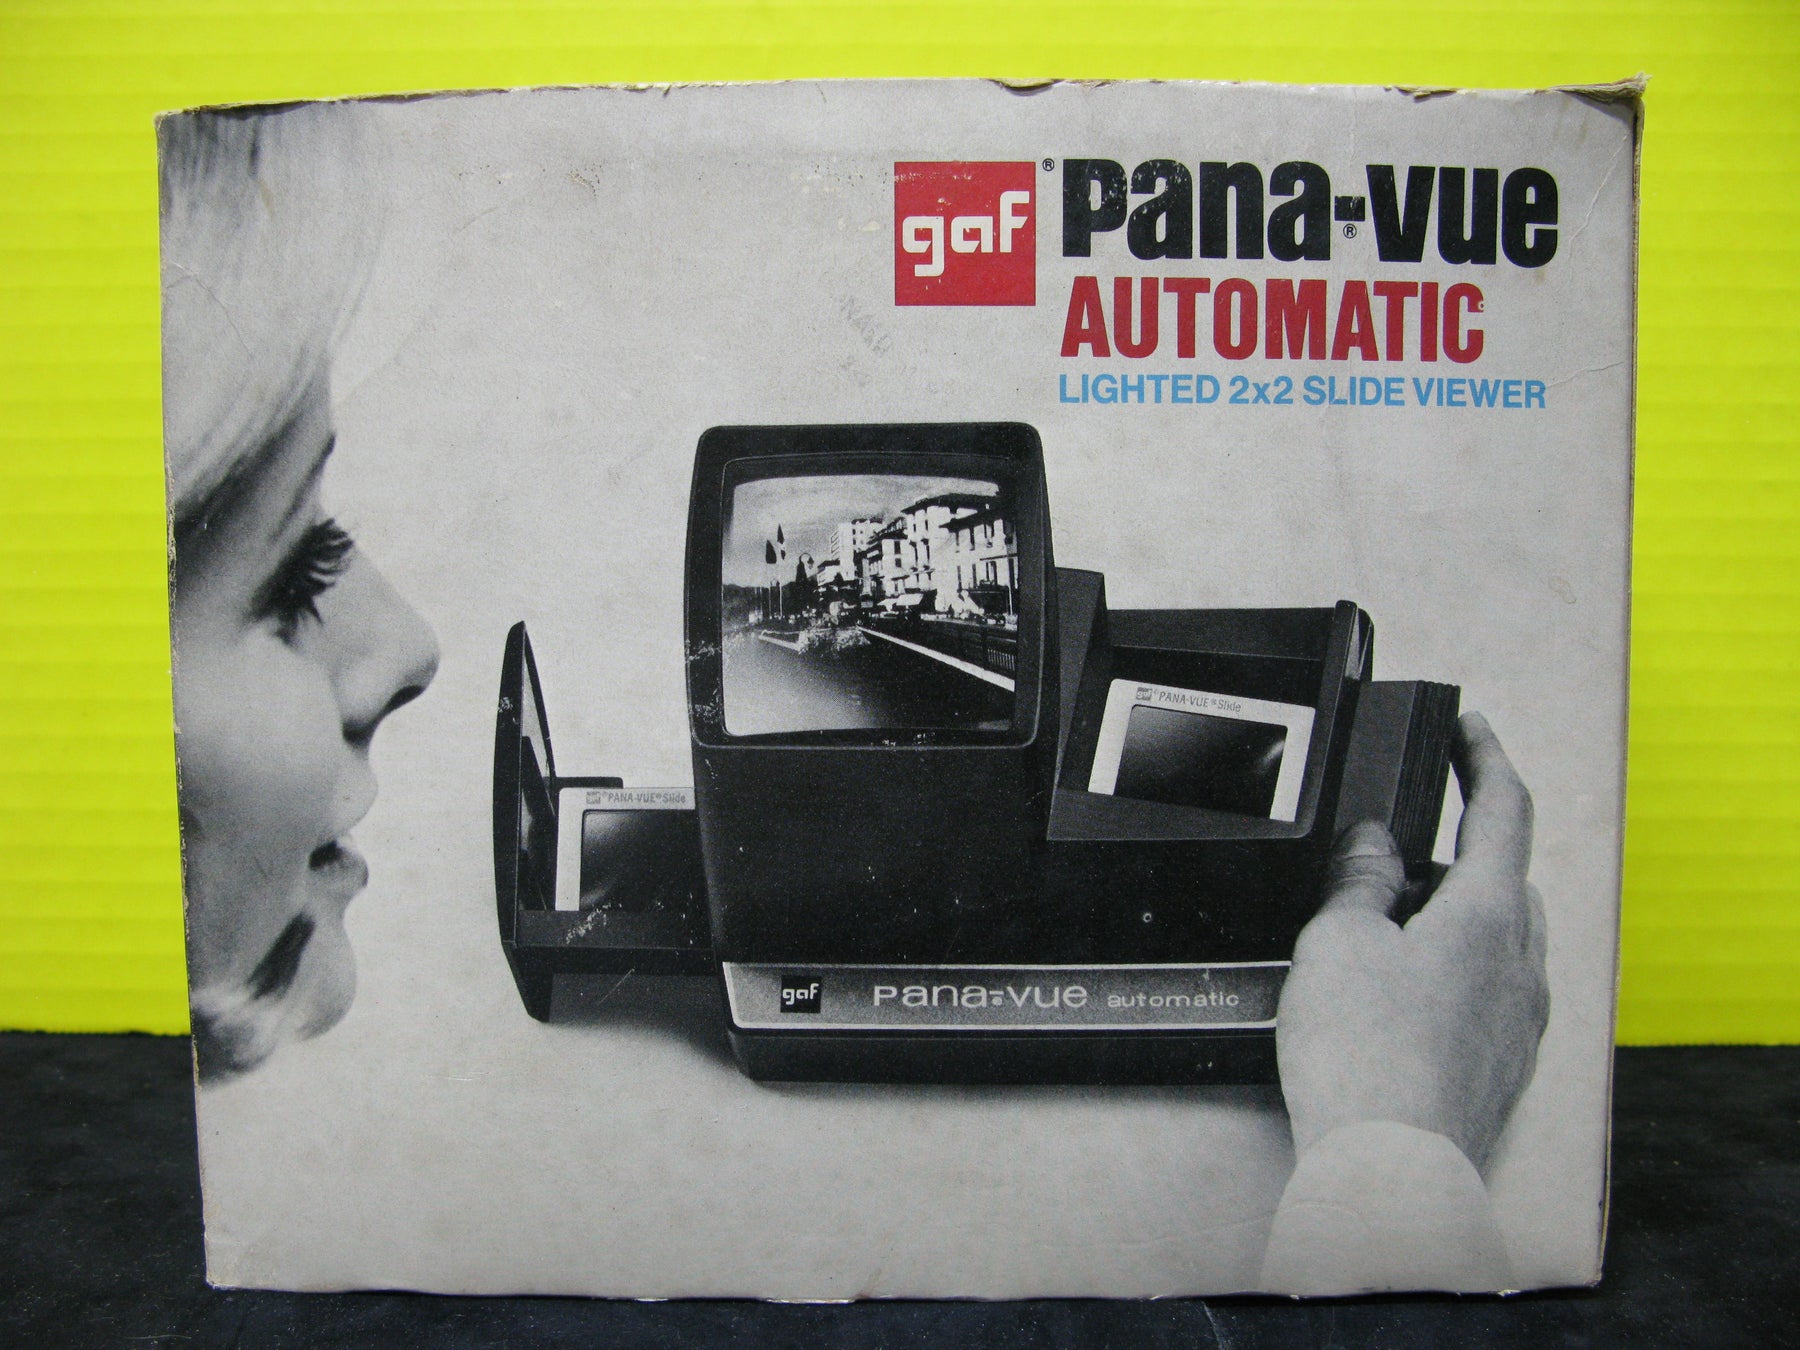 GAF Pana-vue Automatic Lighted 2x2 Slide Viewer